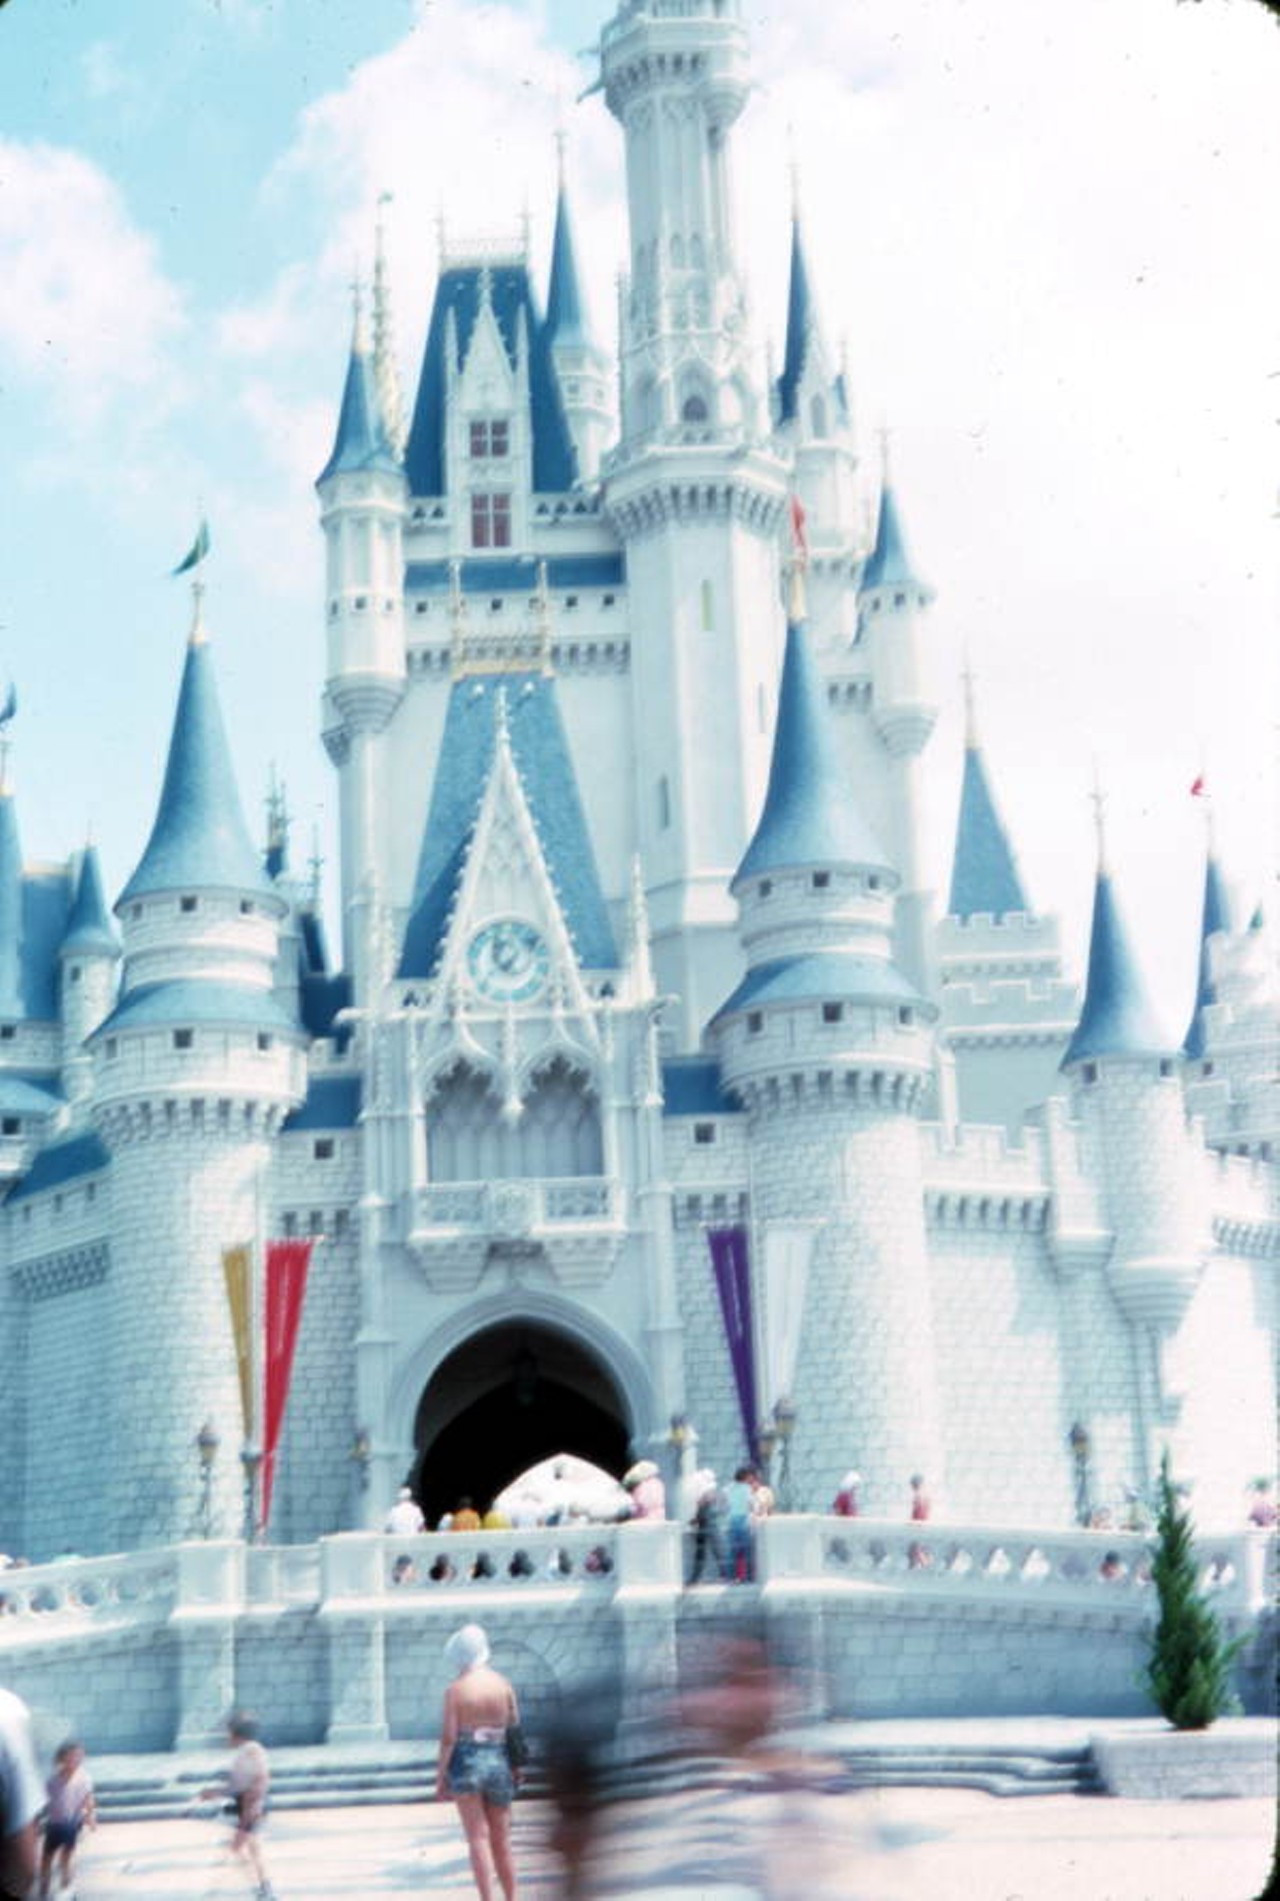 View of Cinderella's Castle at the Magic Kingdom - Orlando, Florida, 1981 (love that motion blur)